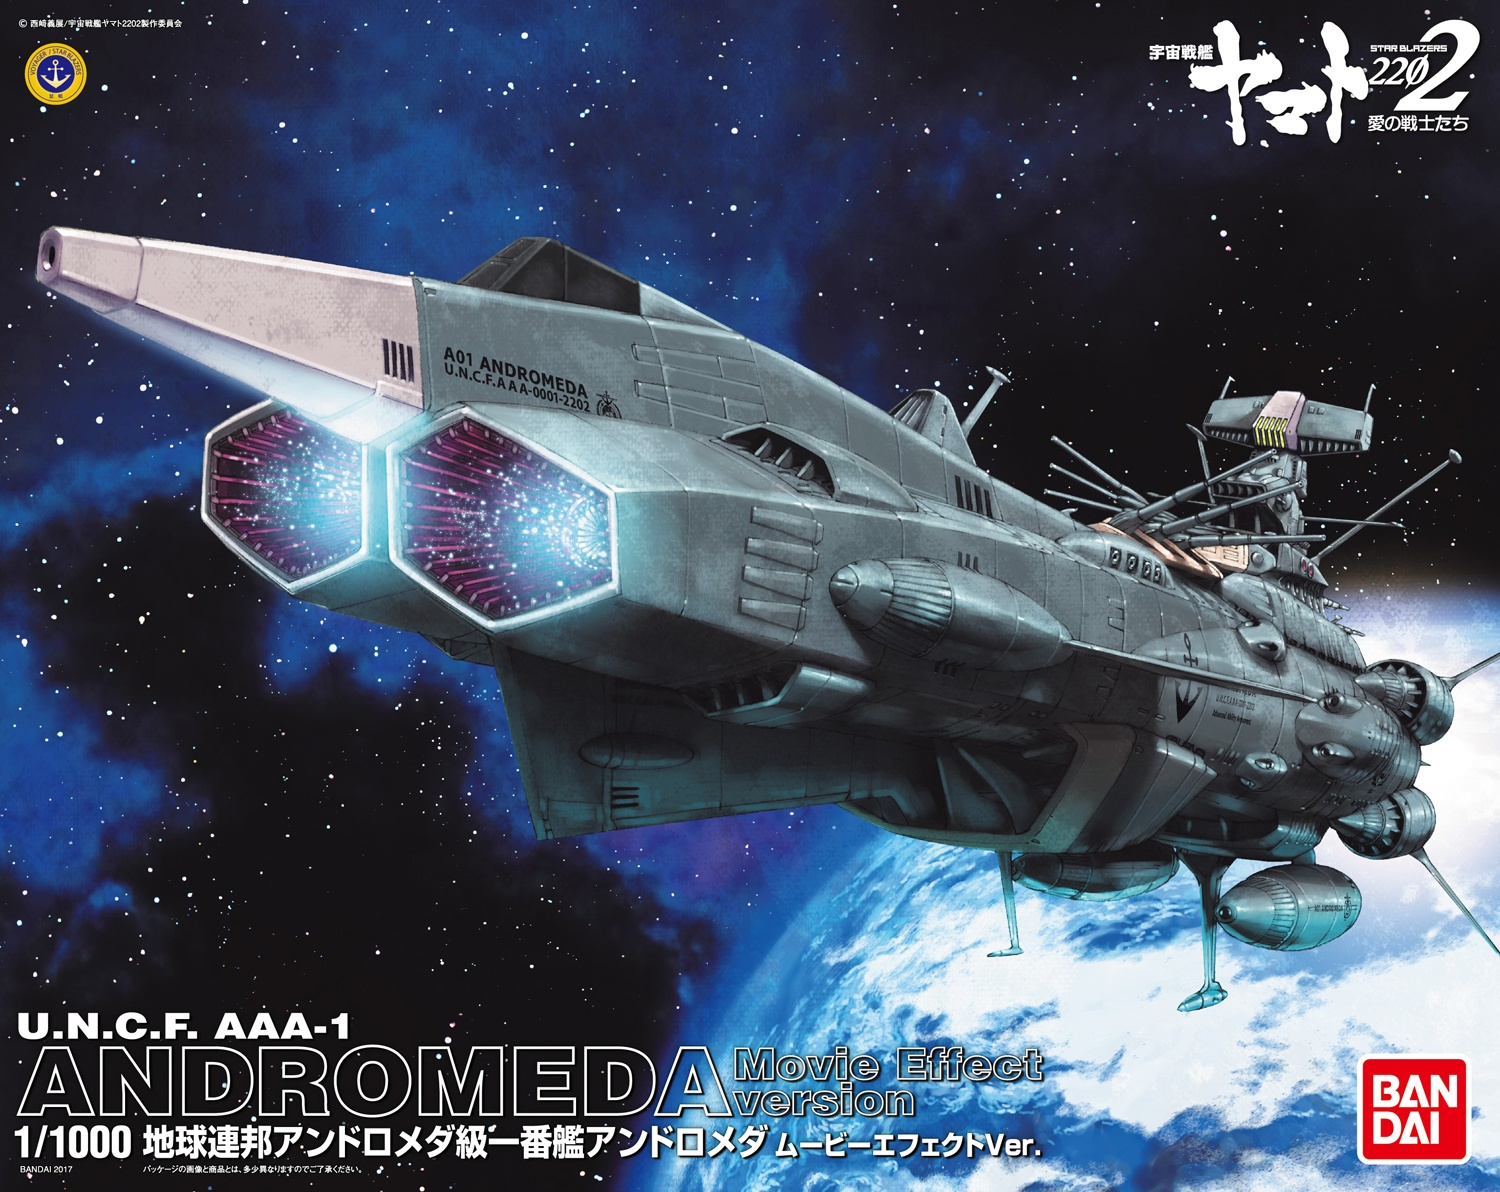 Star Blazers: Space Battleship Yamato 2199 1/1000 SPACE BATTLESHIP YAMATO 2202: EARTH FEDERATION SHIP ANDROMEDA MOVIE EFFECT VER.